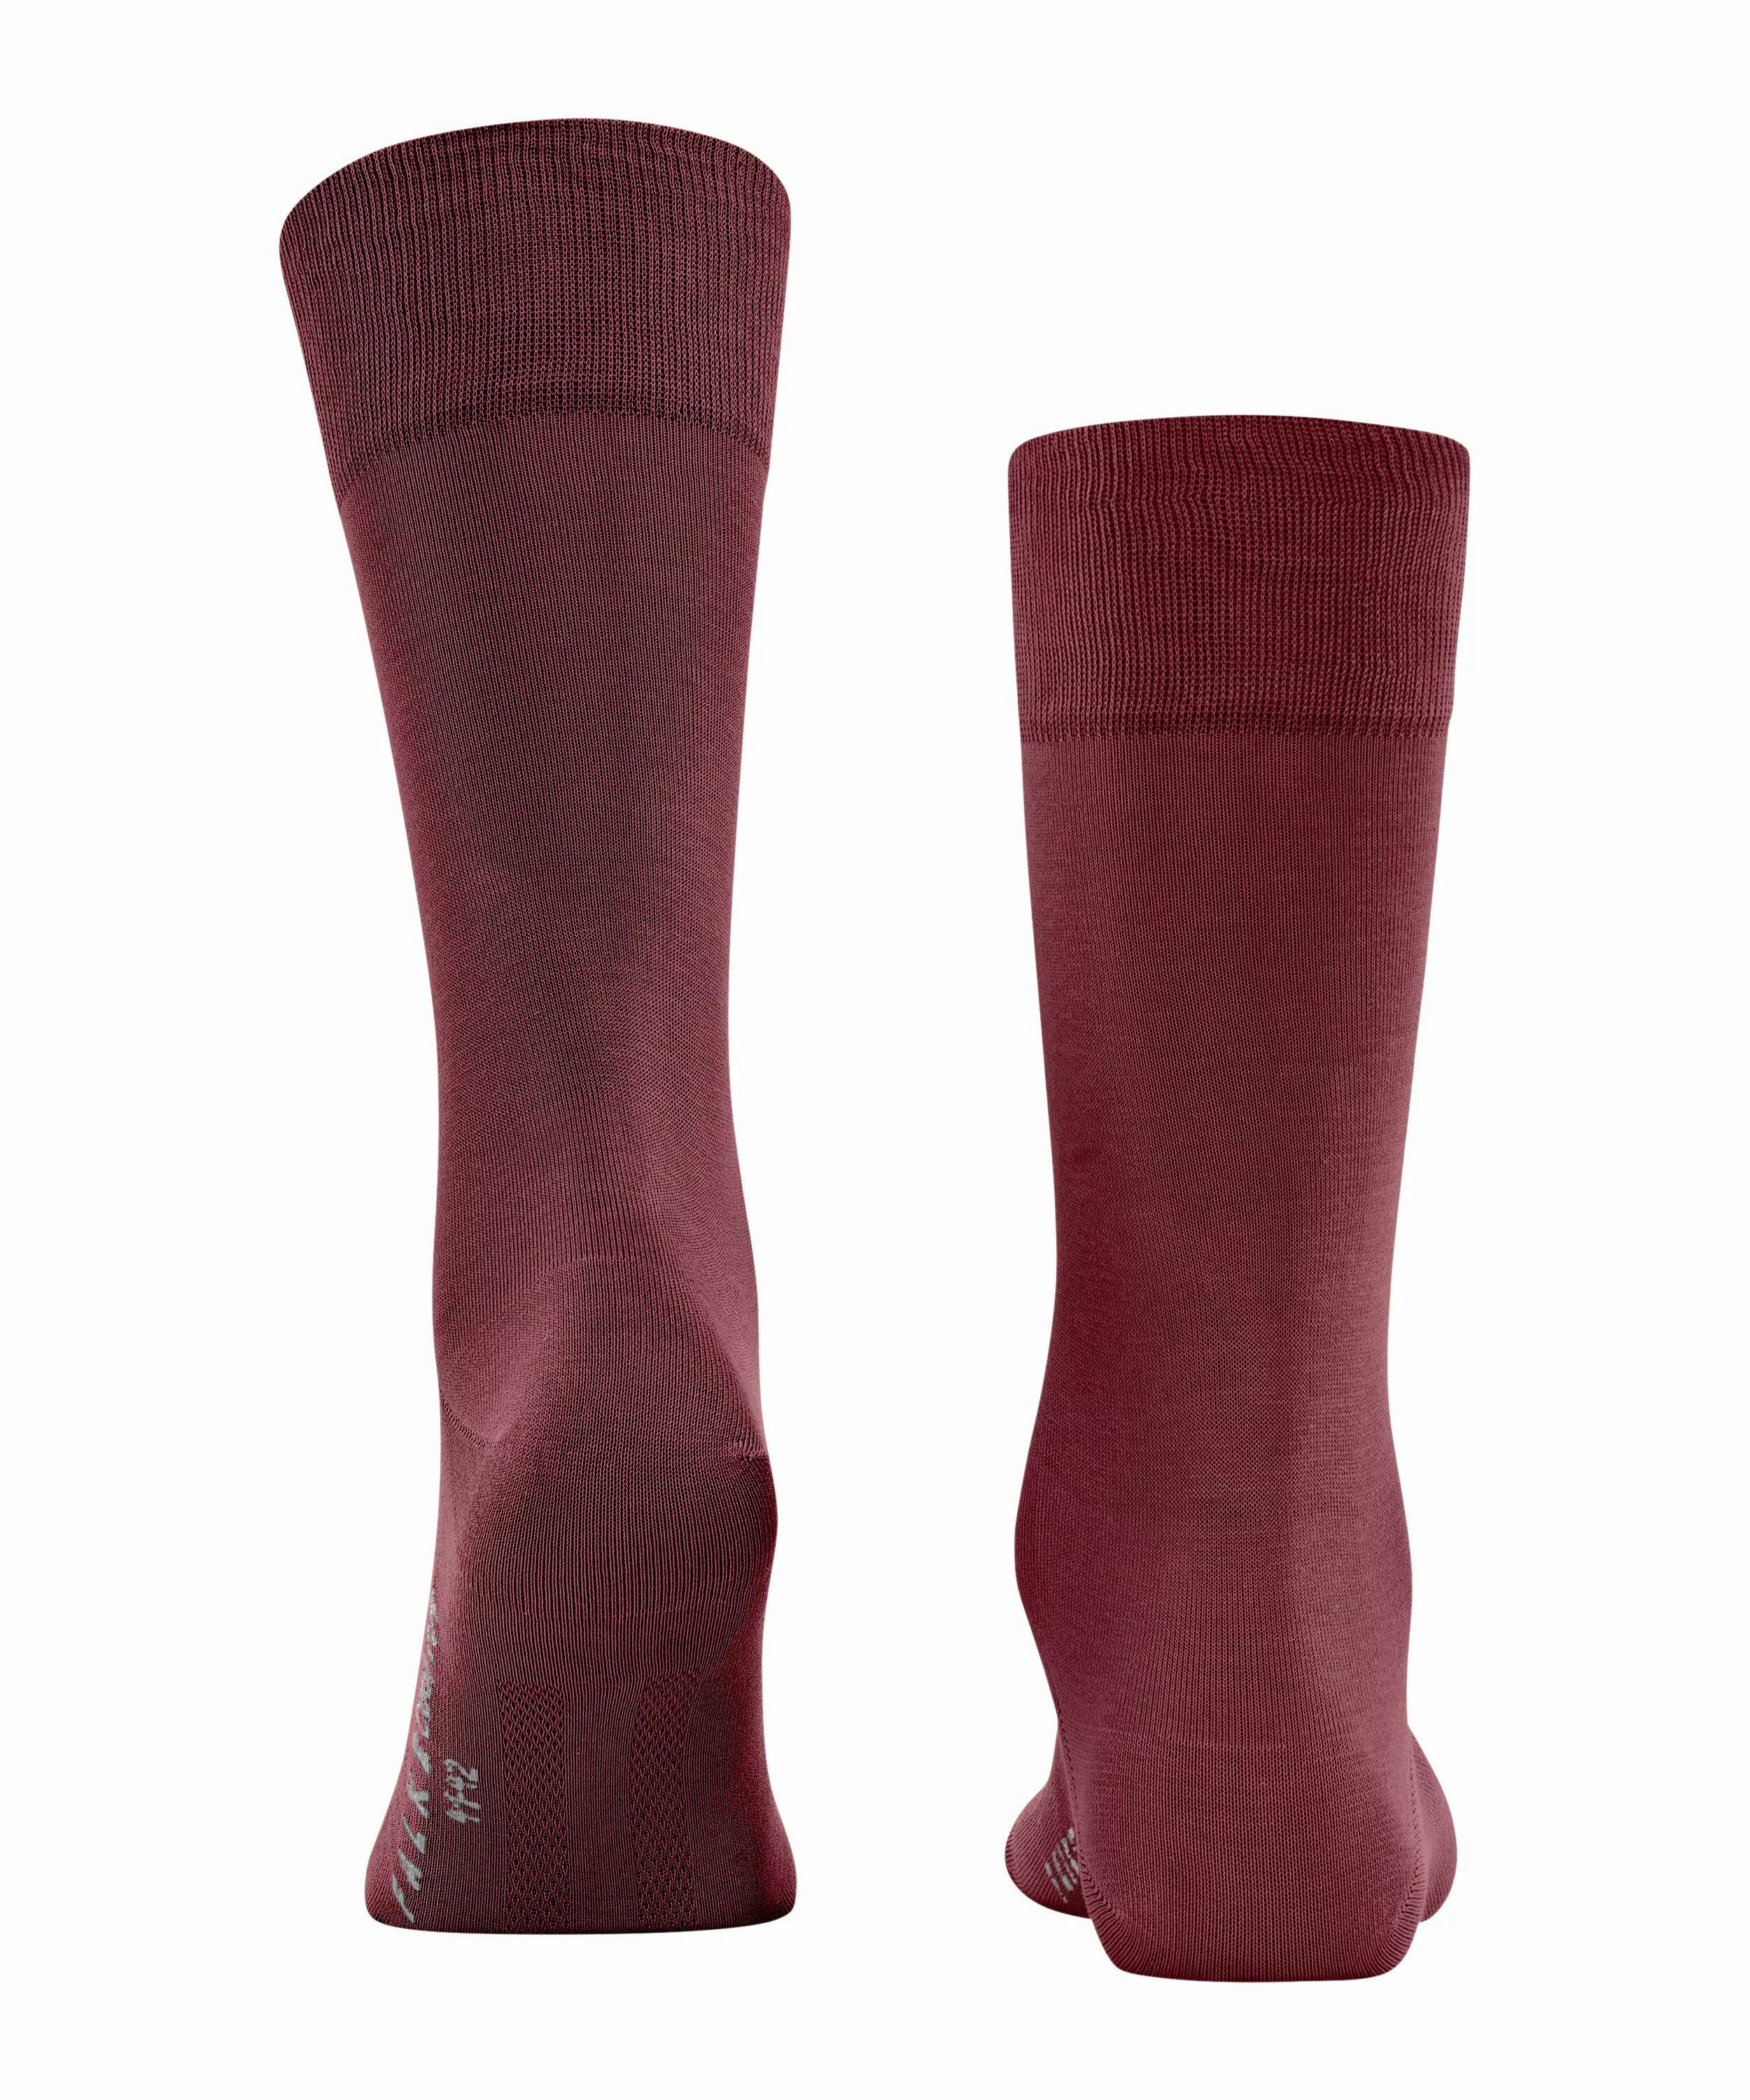 FALKE Cool 24/7 Herren Socken, 45-46, Rot, Uni, Baumwolle, 13230-841306 günstig online kaufen